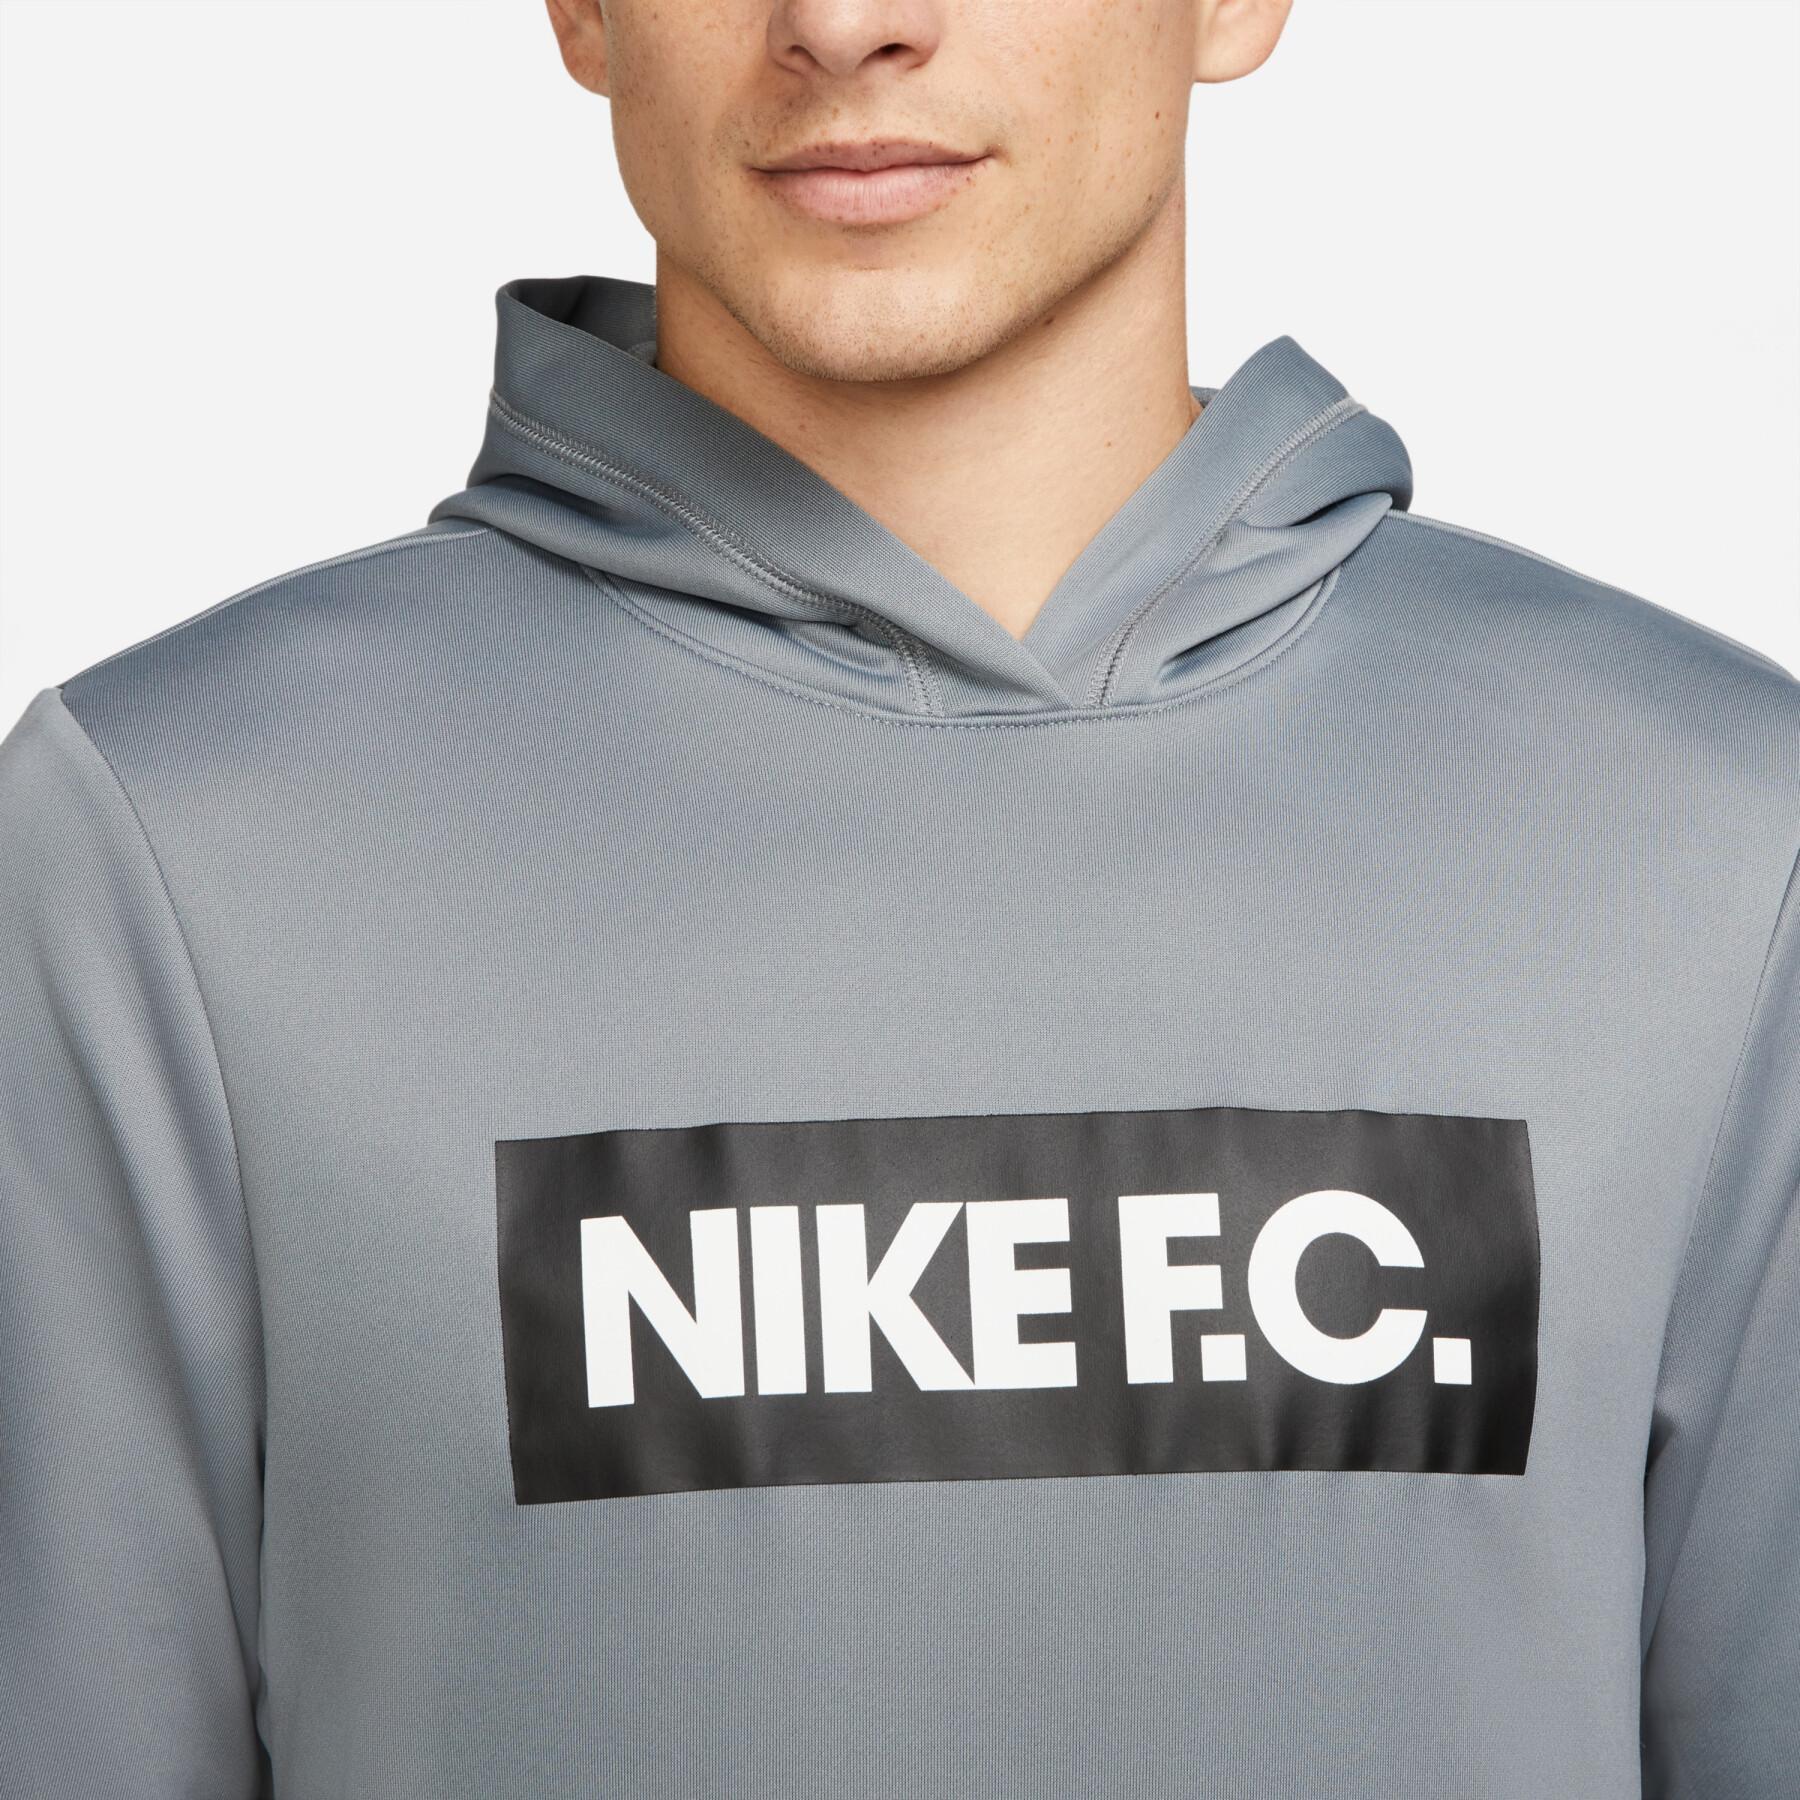 Sudadera con capucha Nike F.C.